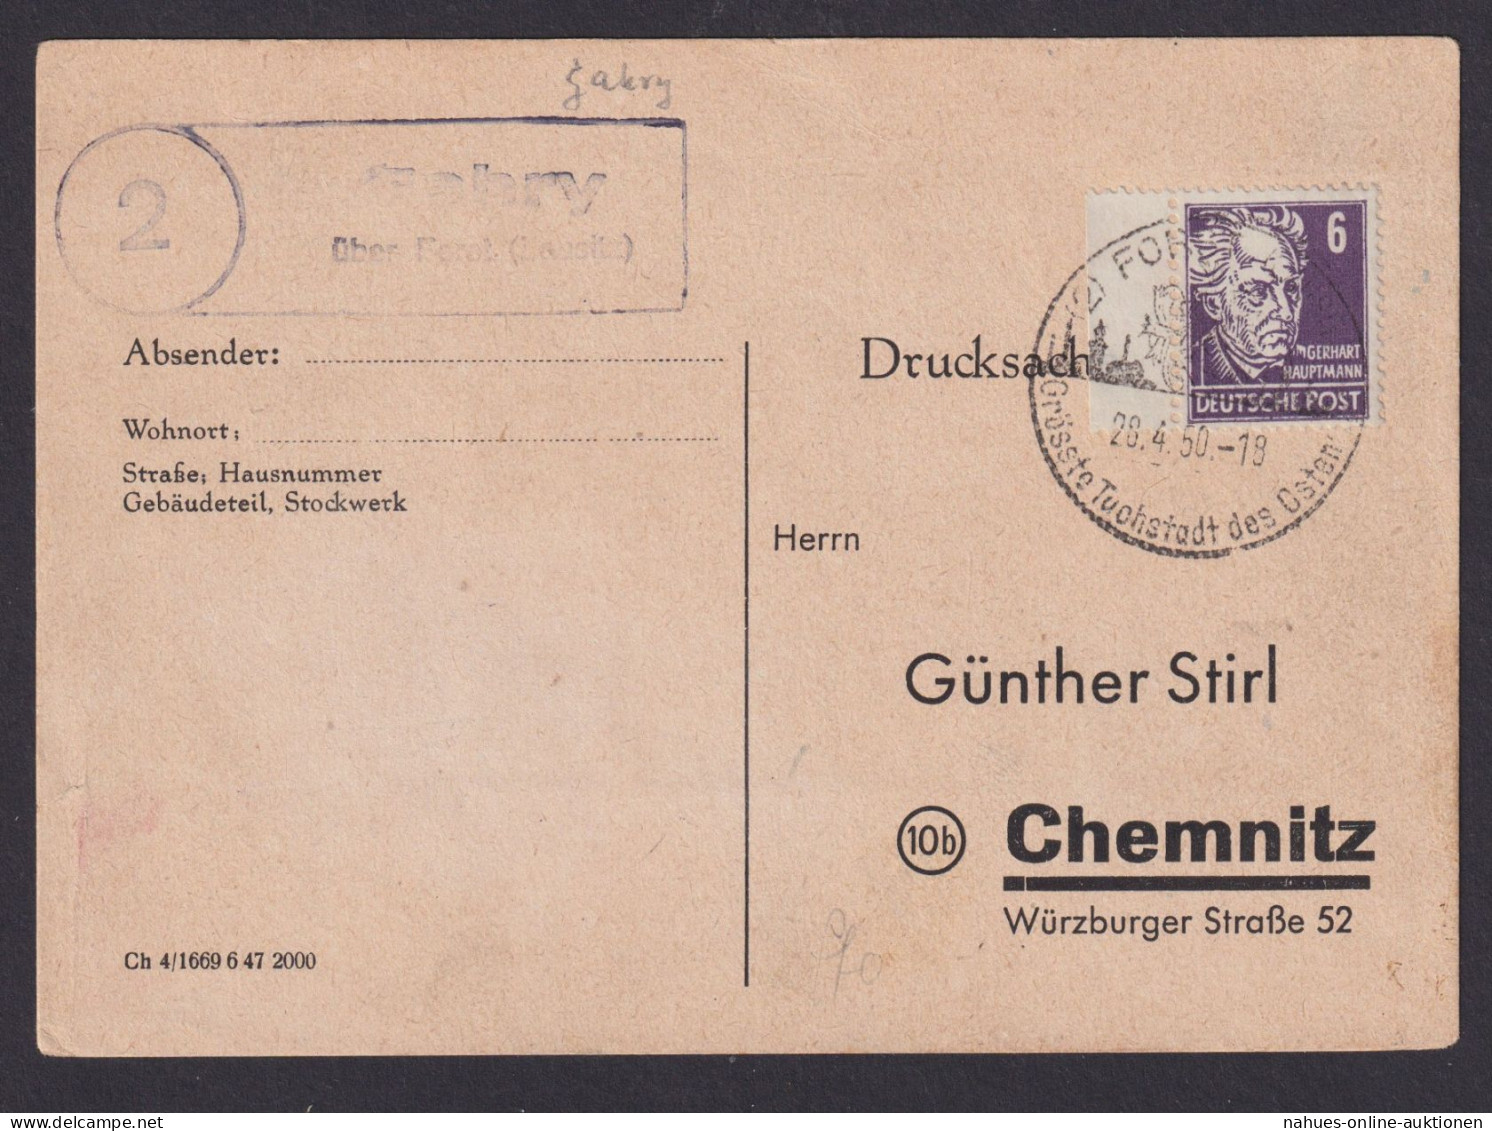 Gahry über Forst Lausitz Brandenburg DDR Postkarte Landpoststempel Bogenrand - Covers & Documents